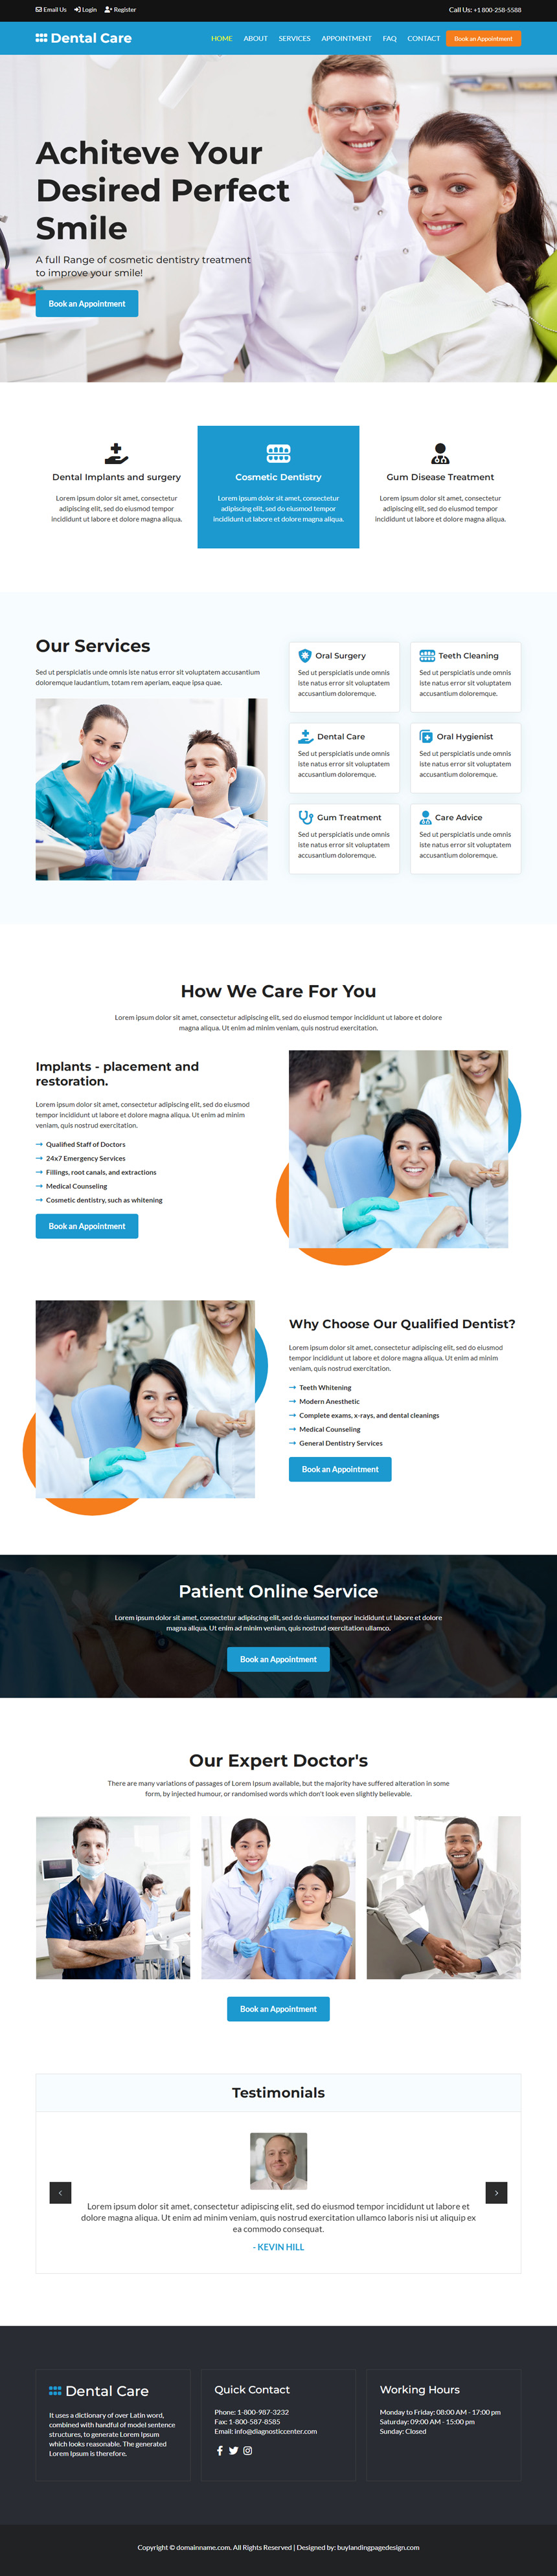 dental care service responsive website design